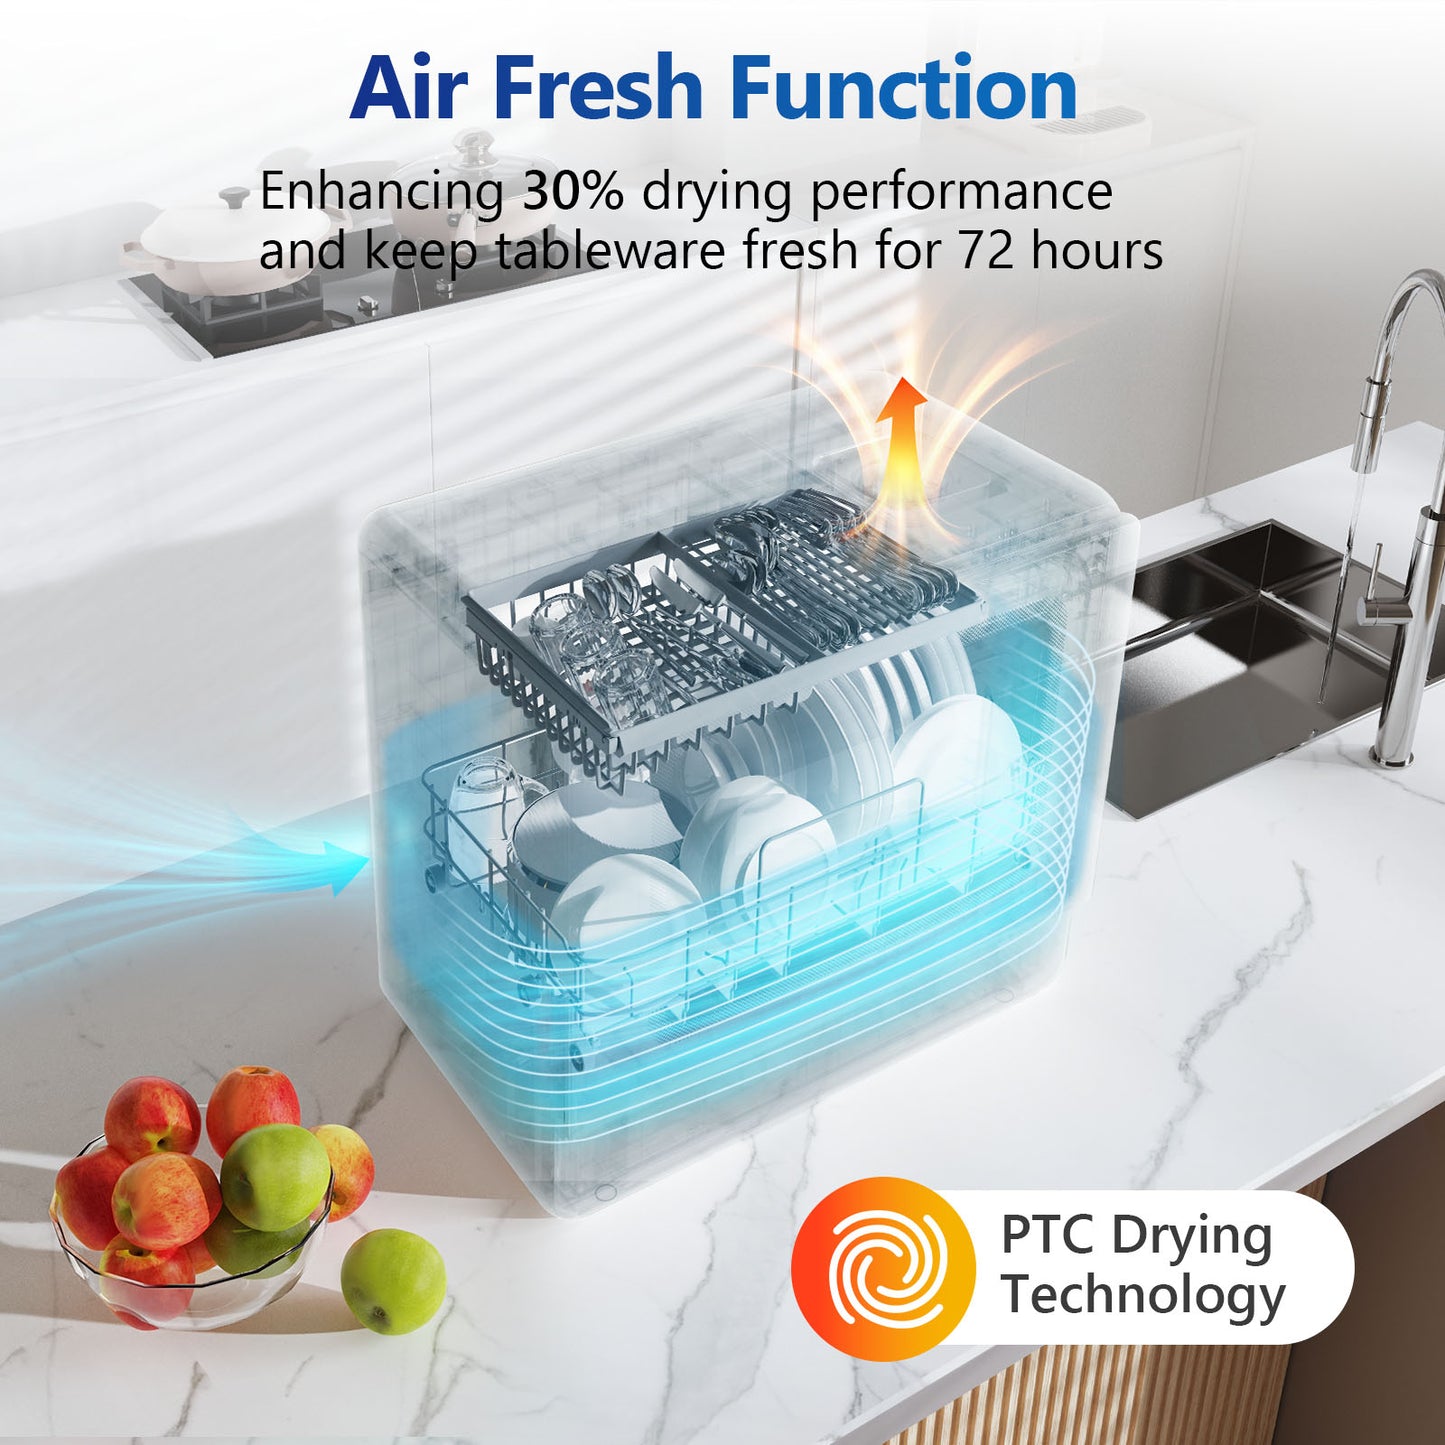 AIRMSEN Portable Countertop Dishwasher DTHA01